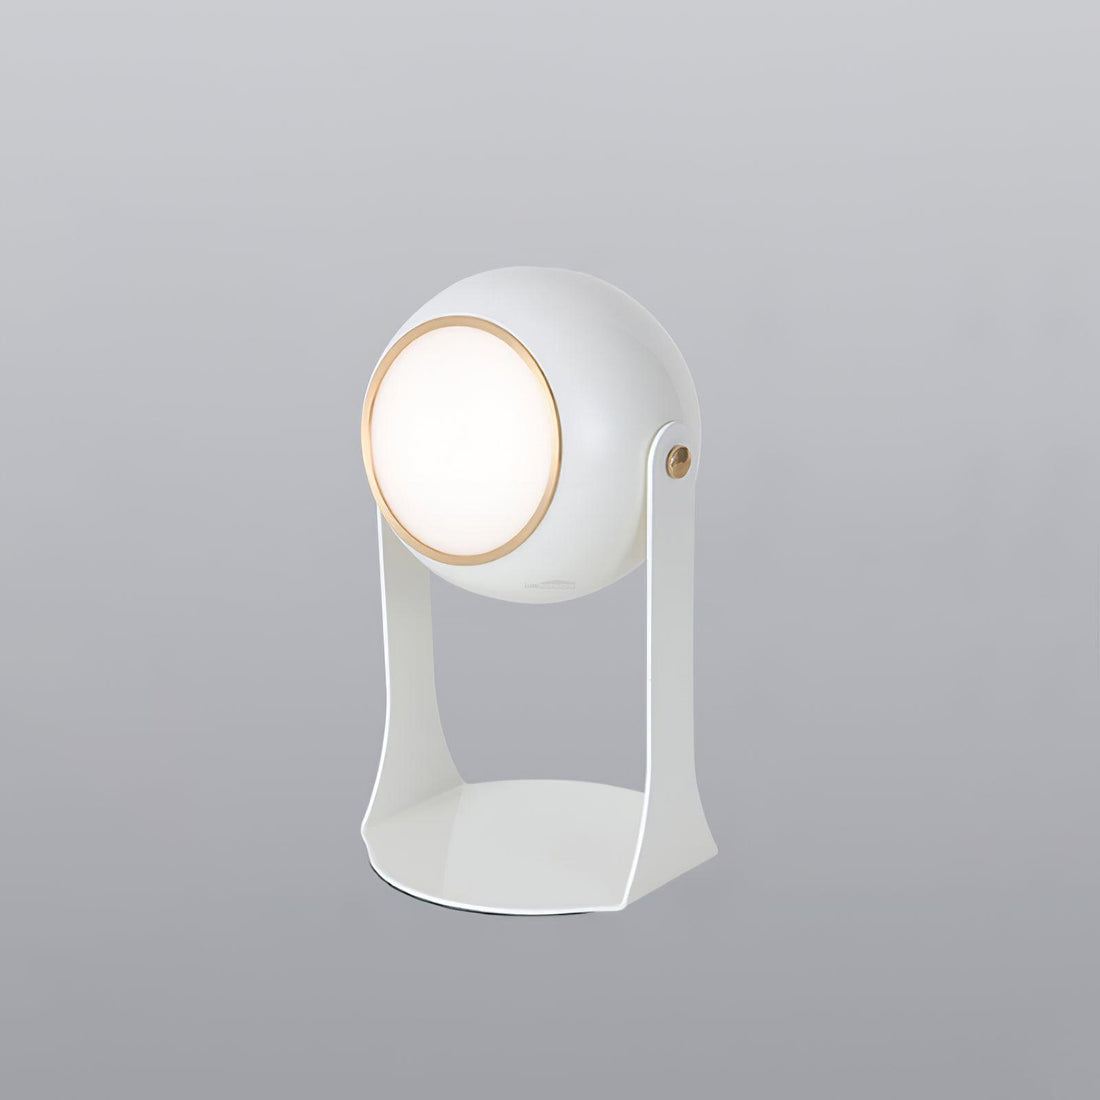 Svejk Built-in Battery Table Lamp  ∅ 3.9″